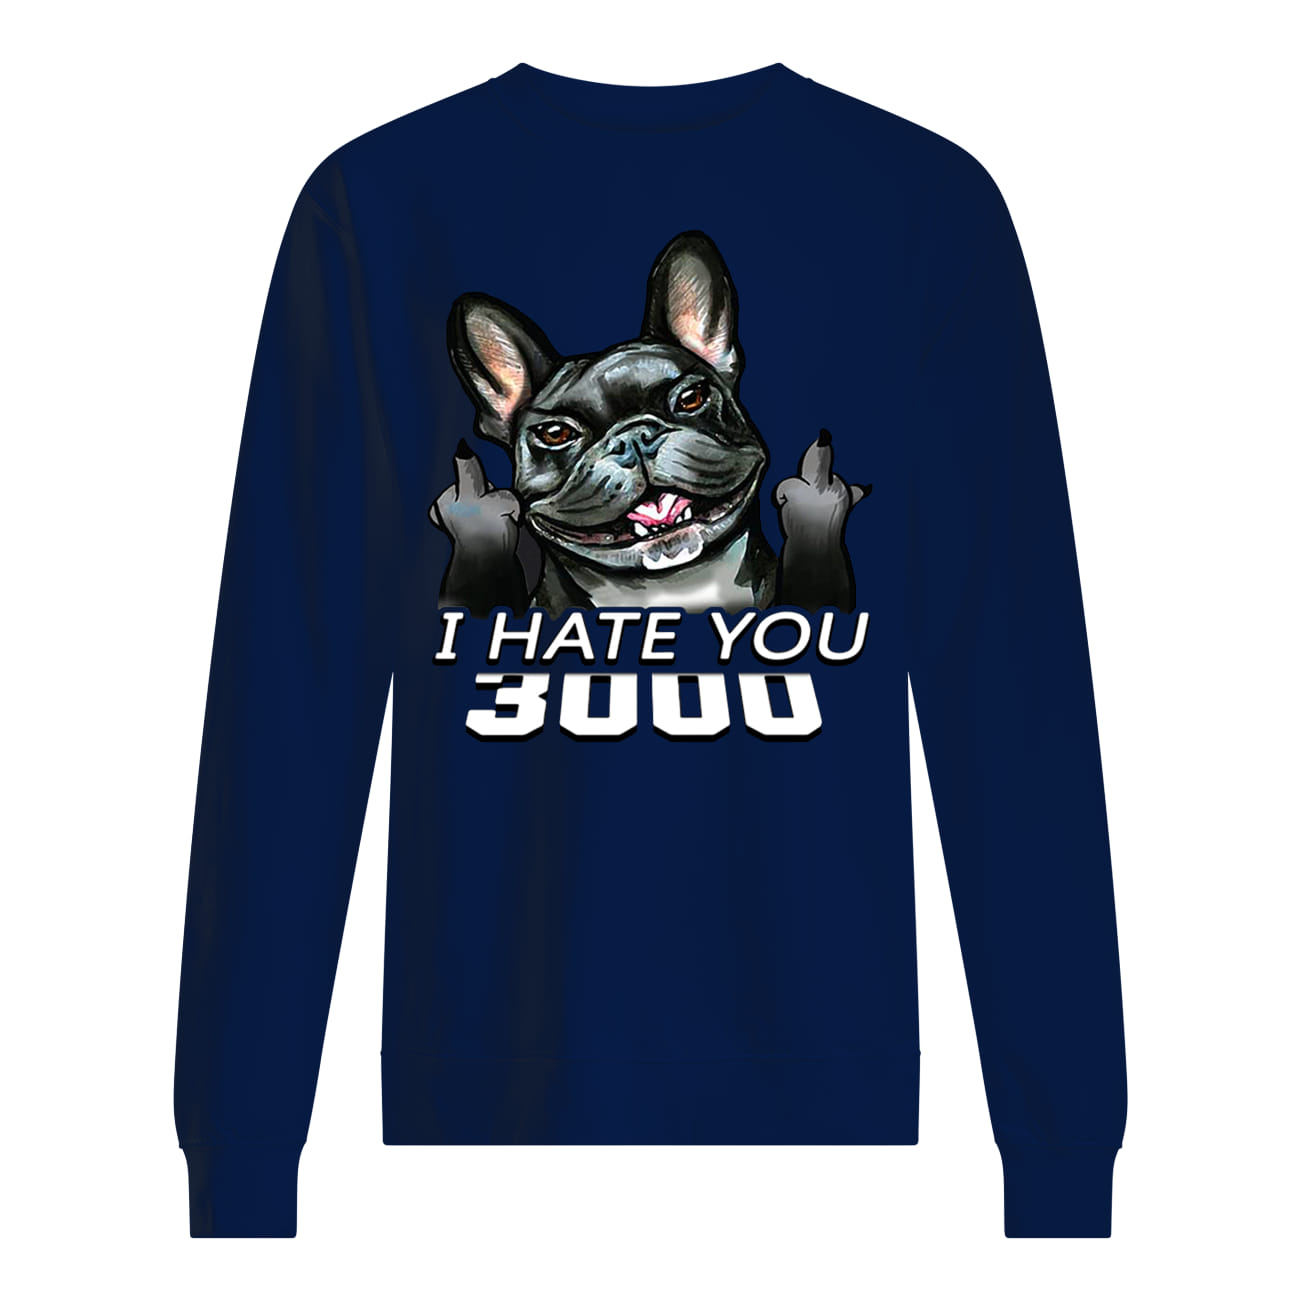 French bulldog I hate you 3000 sweatshirt